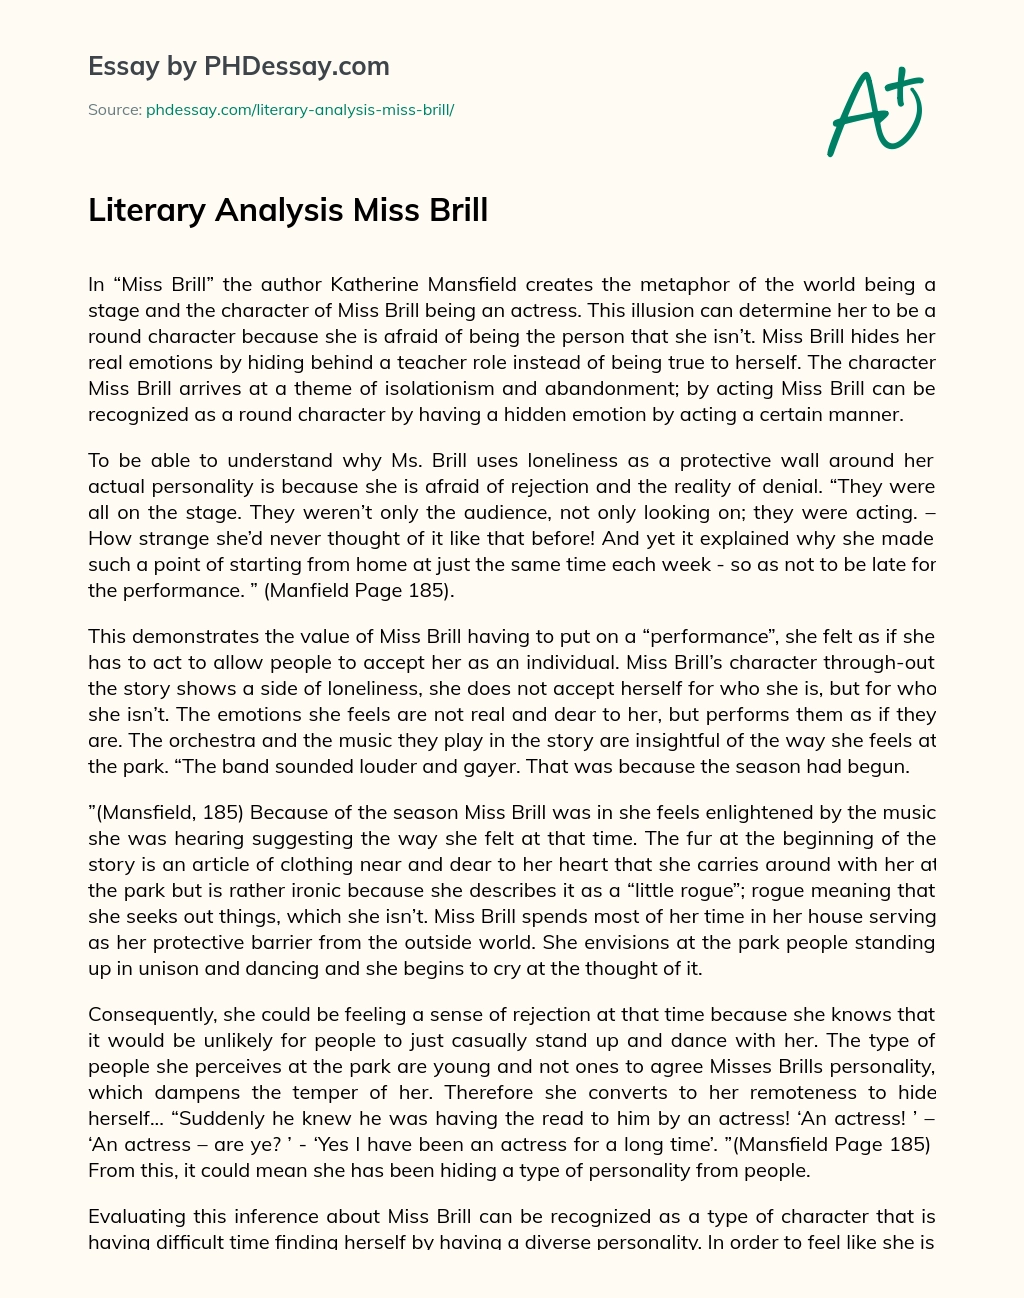 Literary Analysis Miss Brill essay